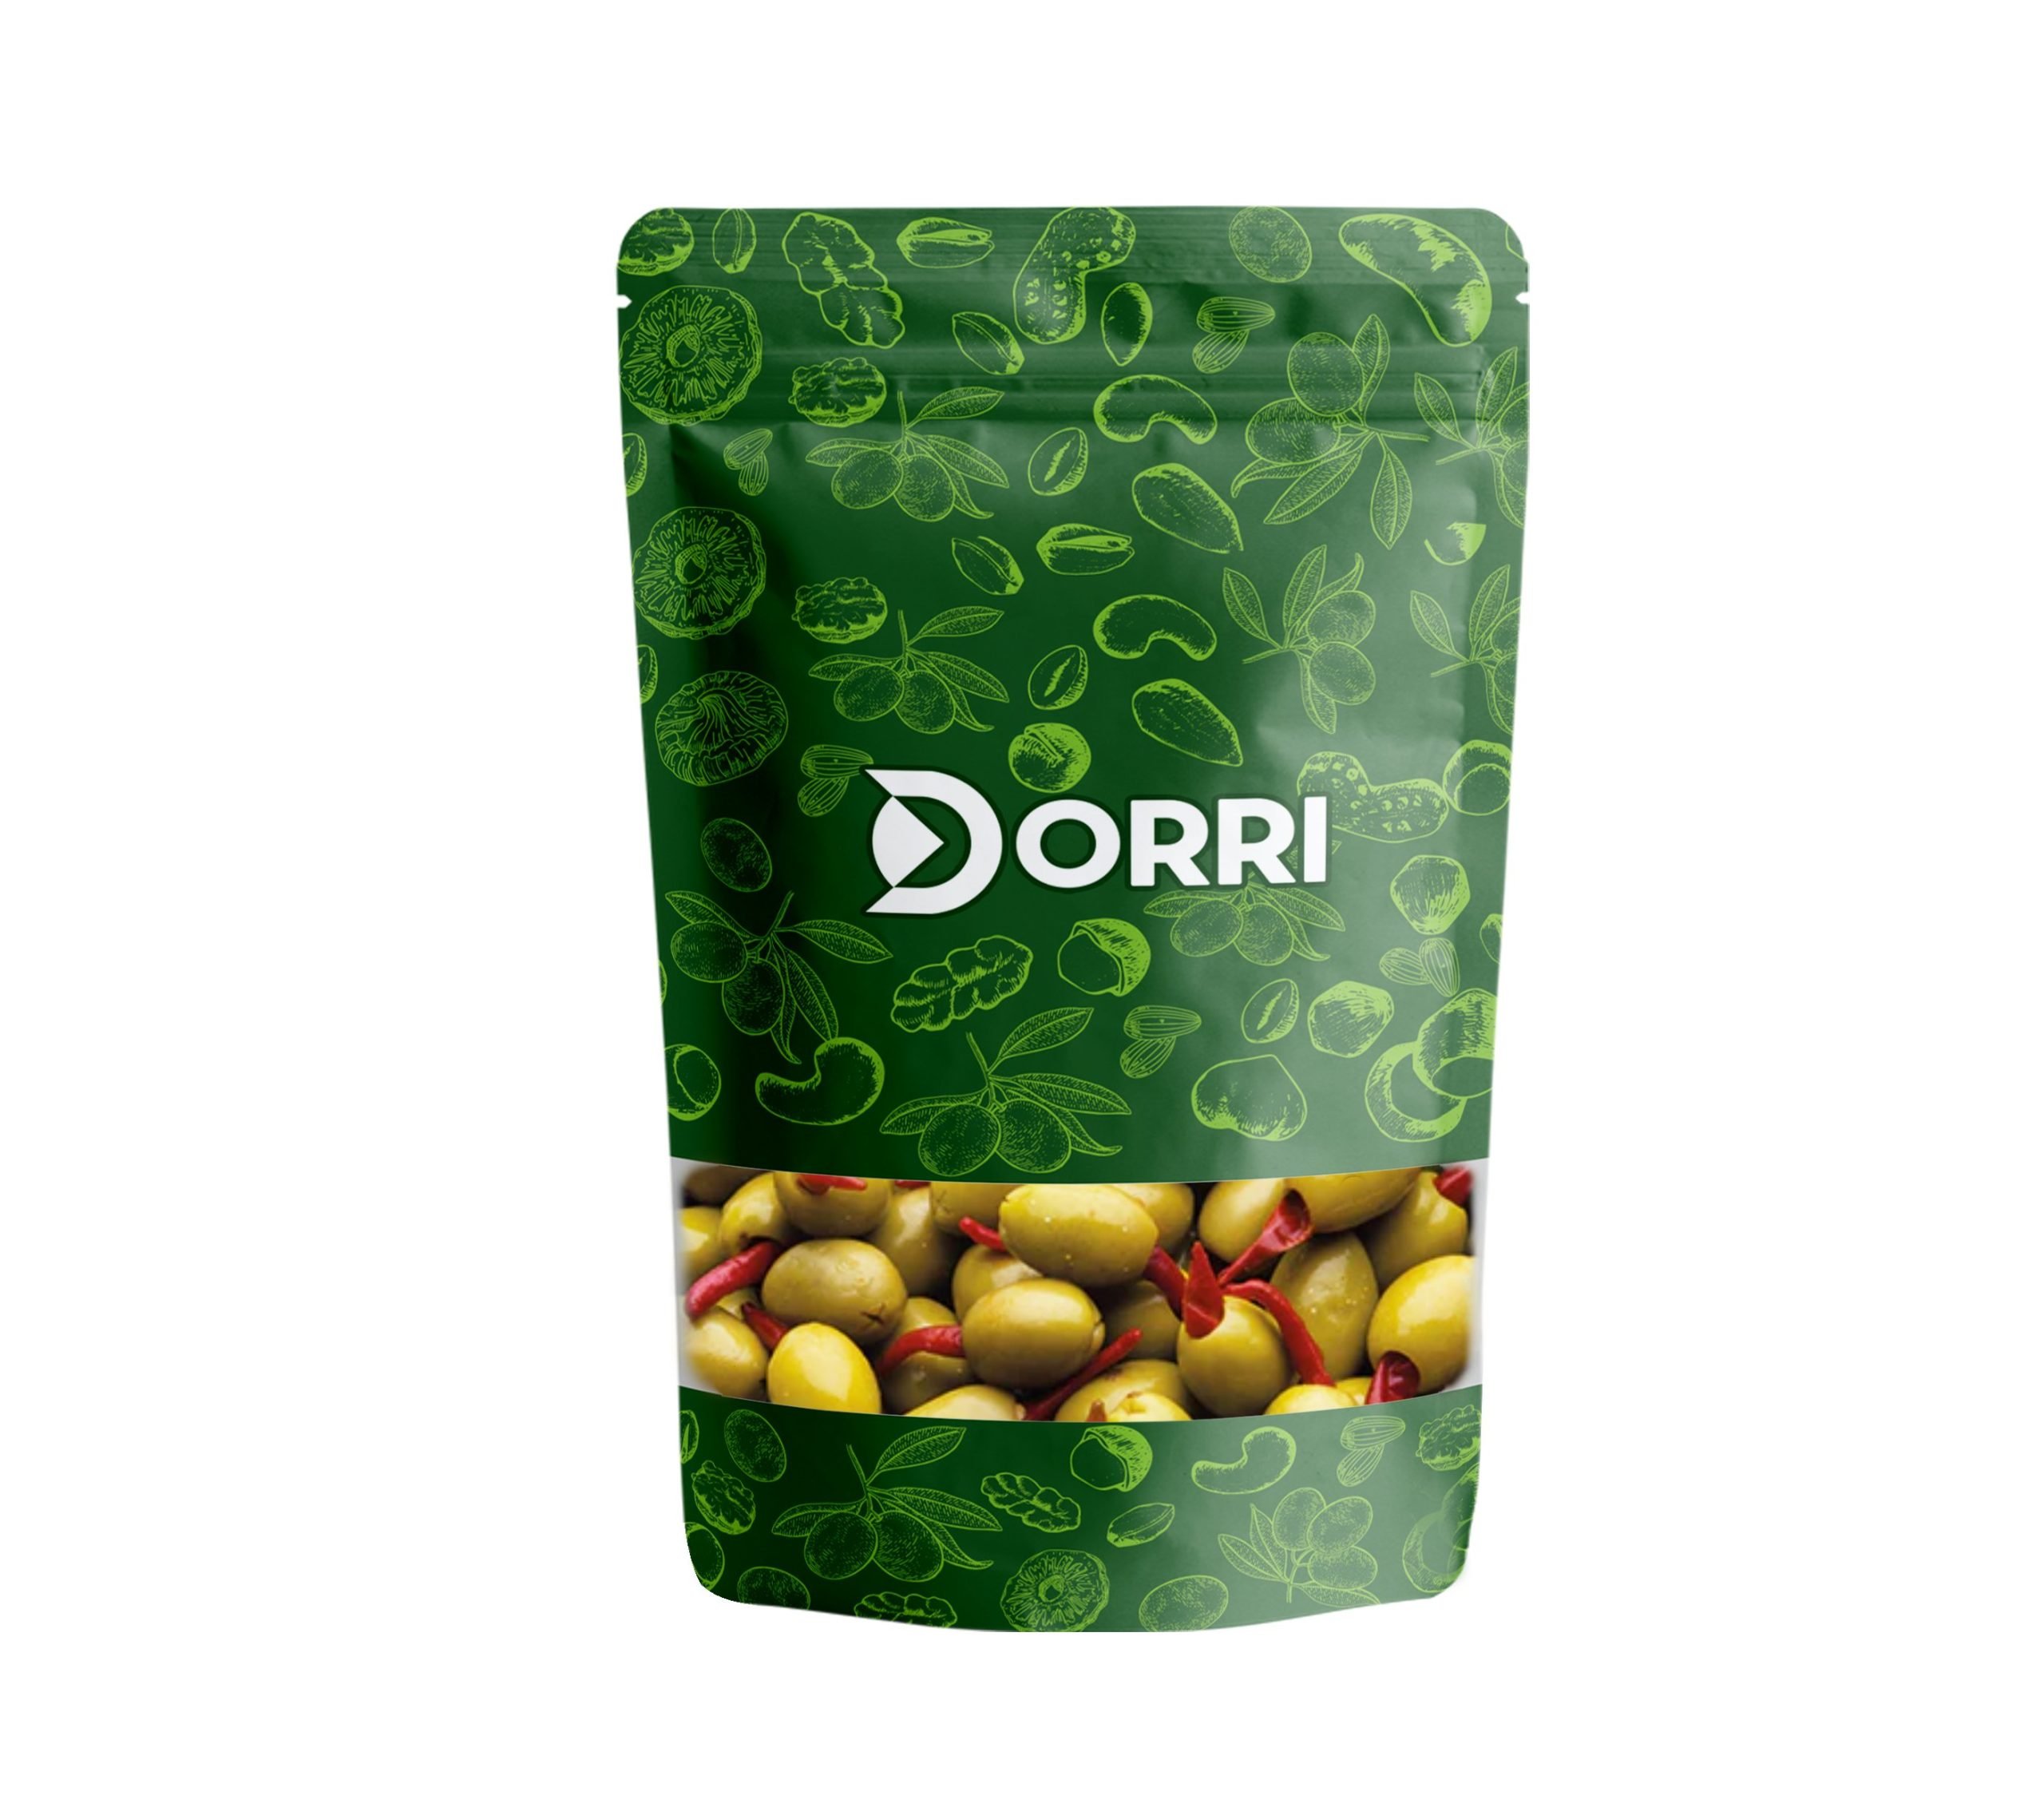 Dorri - Olives Stuffed Piri Piri in Extra Virgin Olive Oil